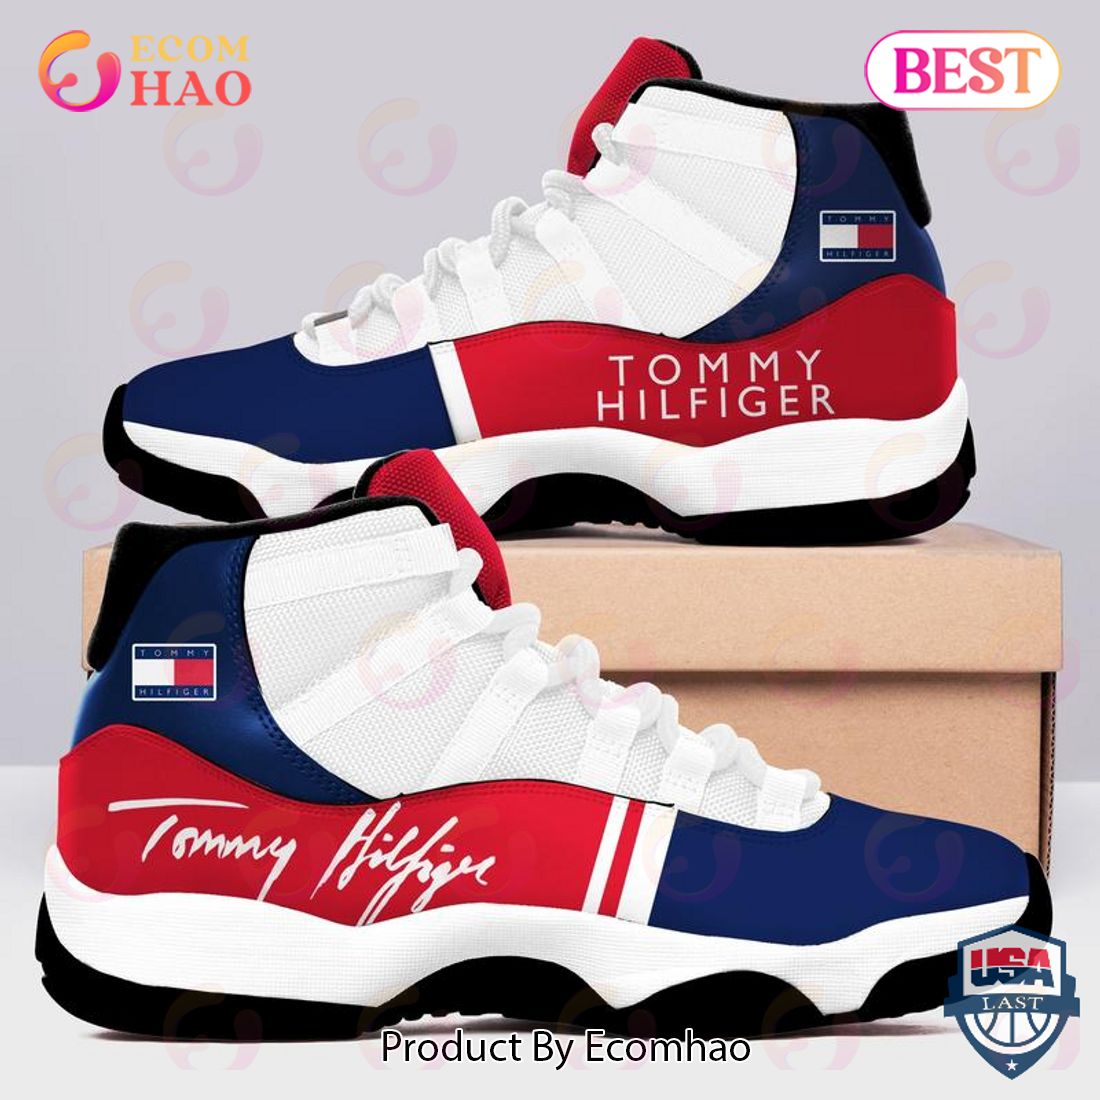 Tommy Hilfiger Air Jordan 11 Shoes, Sneaker